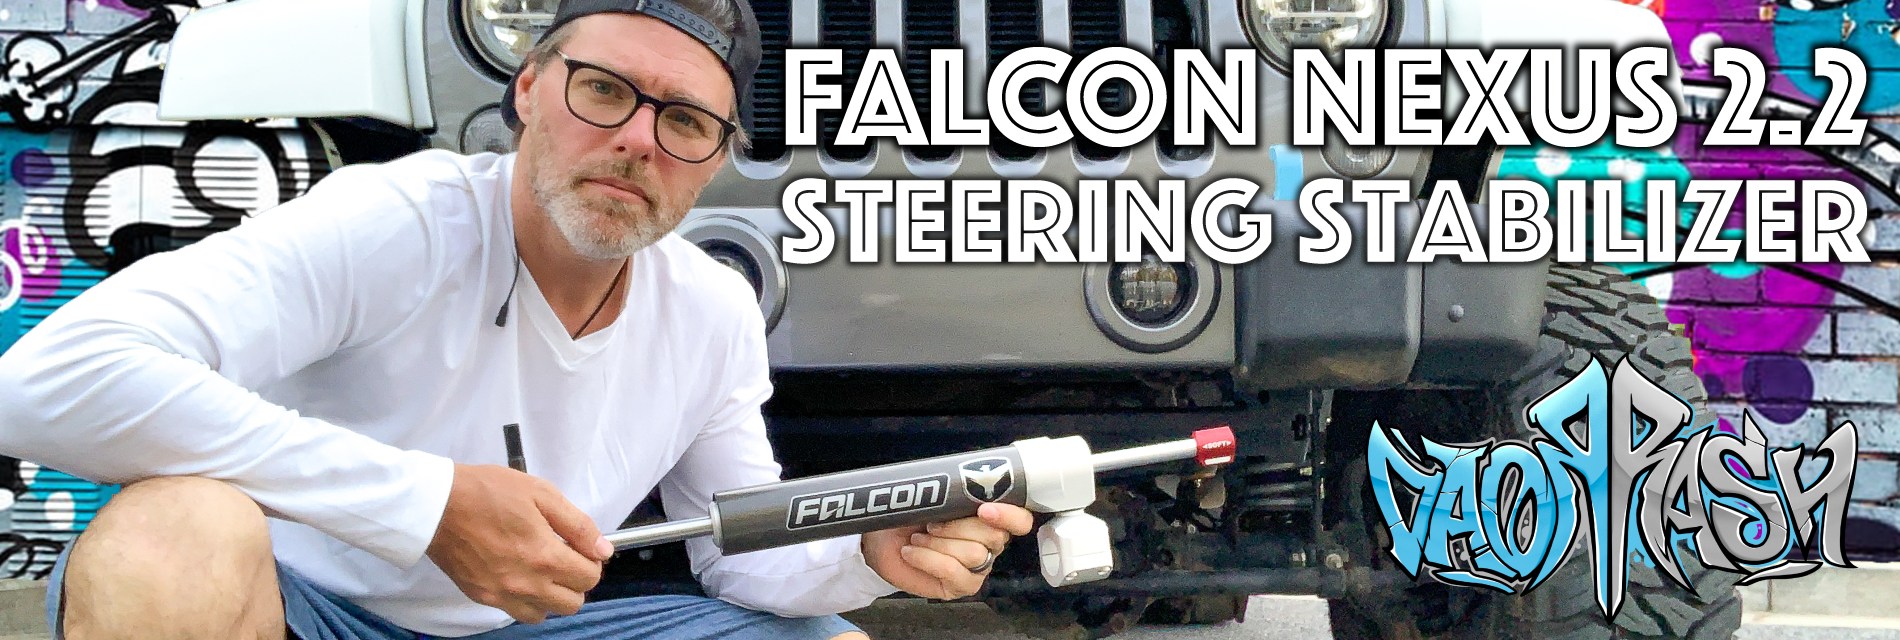 Falcon Nexus Steering Stabilizer